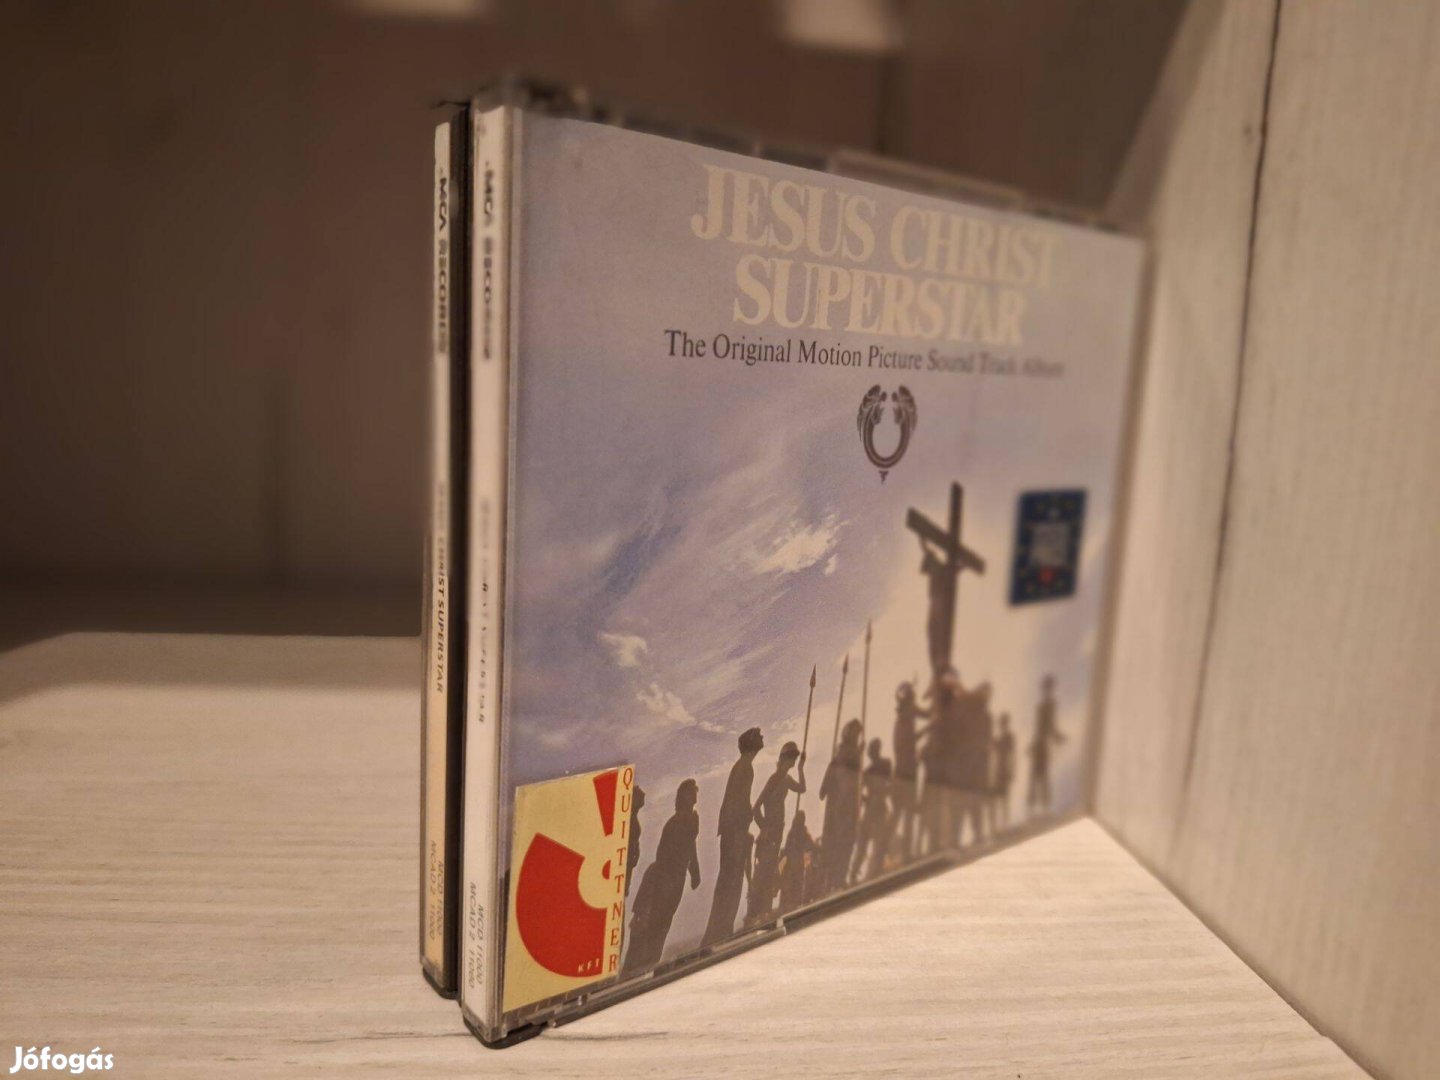 Jesus Christ Superstar The Original Motion Picture Soundtrack Album CD